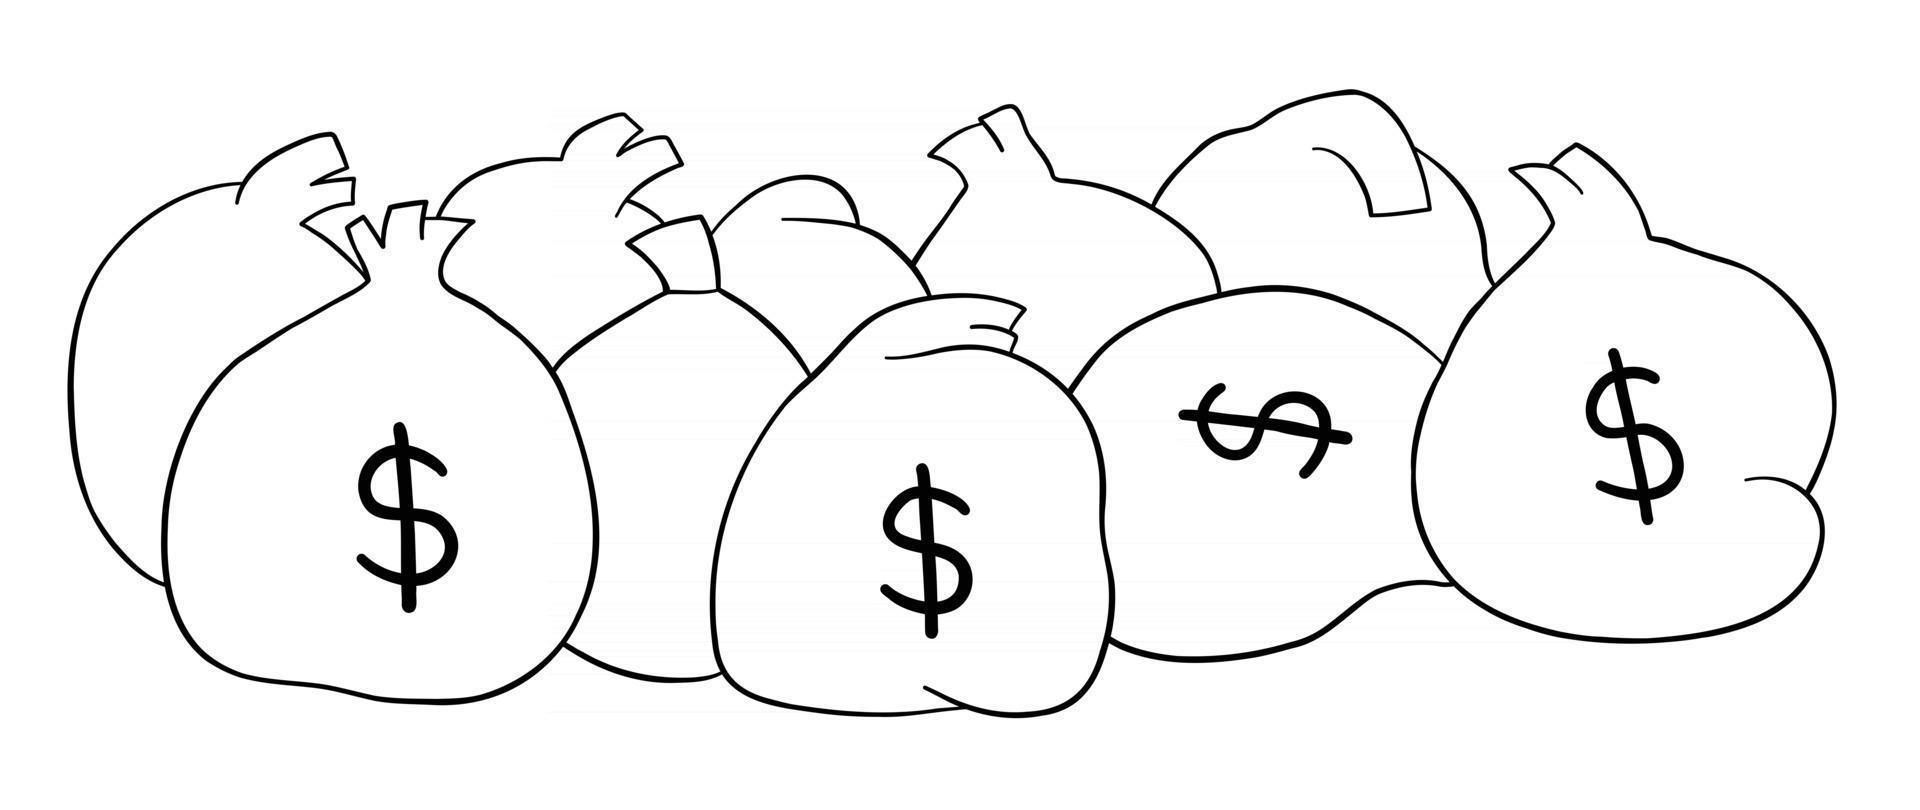 Cartoon Vector Illustration of Sacks Full of Money